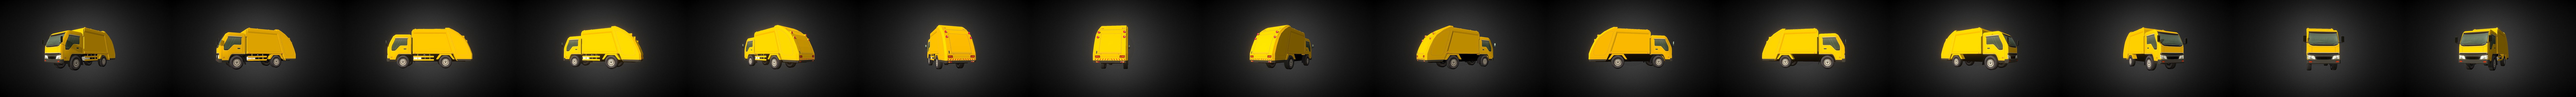 Garbage Truck 3d Model Free Download